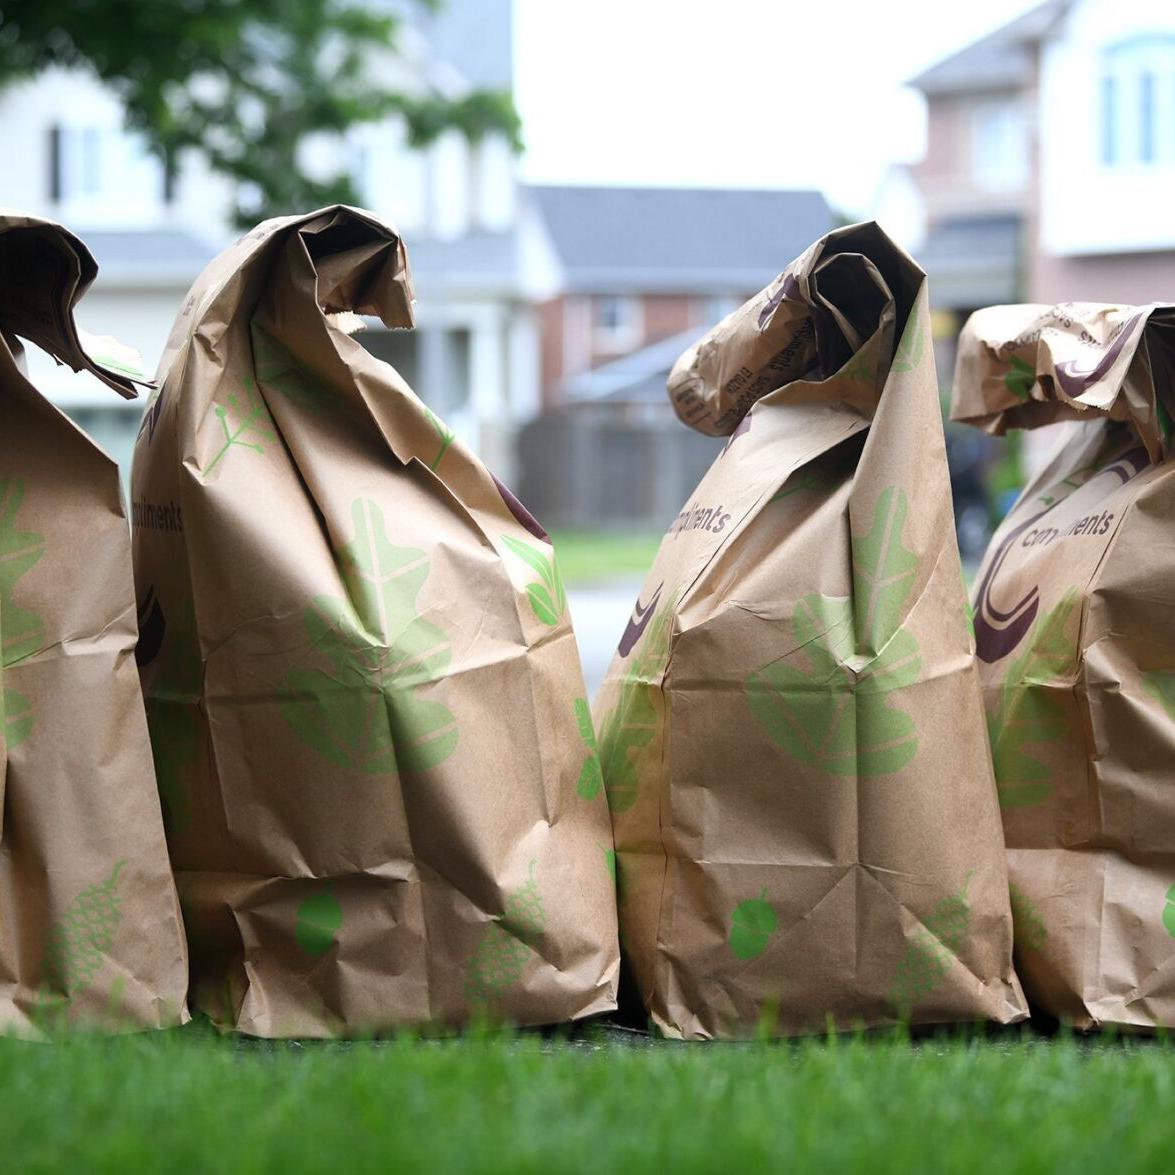 Lawn and Leaf Paper Bag - Endicott, NY - Owego, NY - Owego Endicott Agway